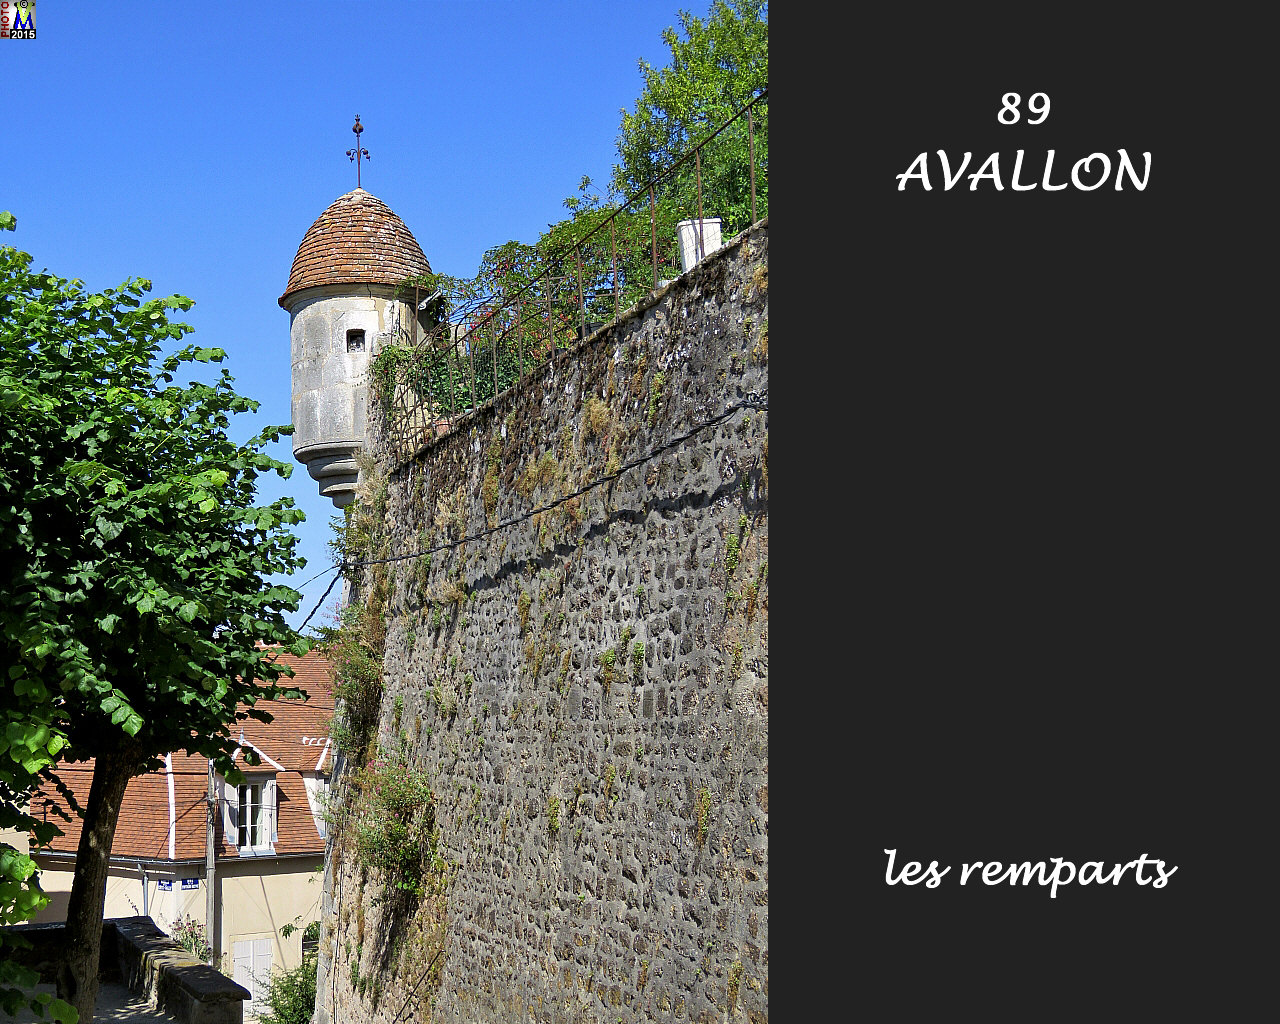 89AVALLON-remparts_116.jpg